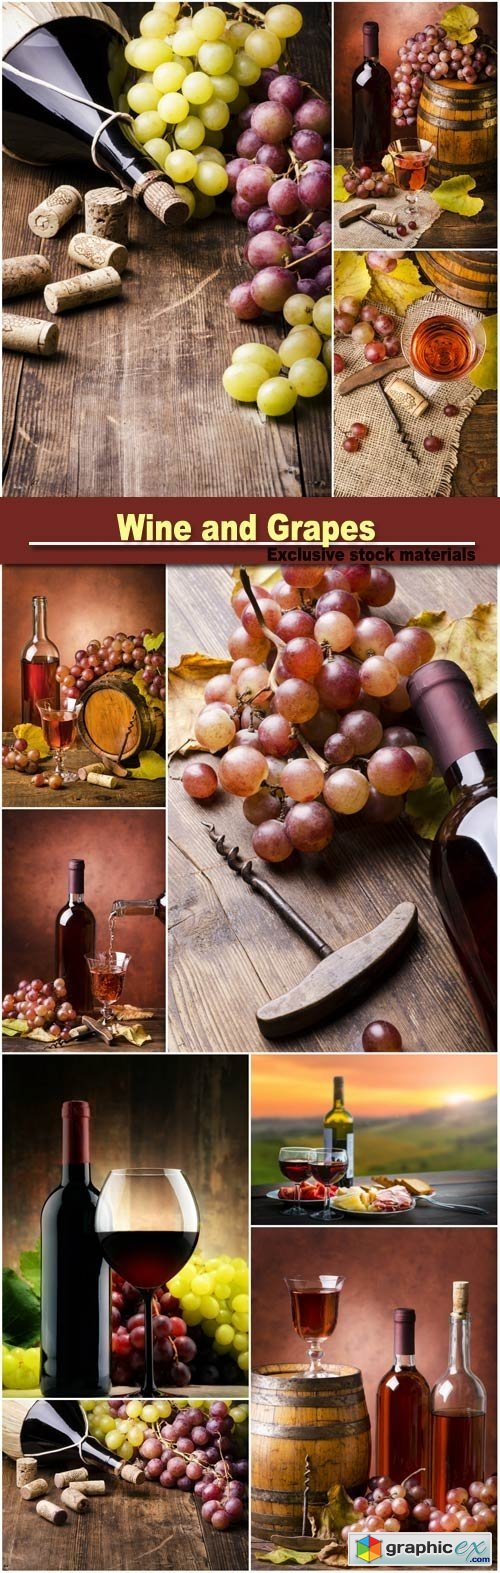 Wine barrels, wine and grapes